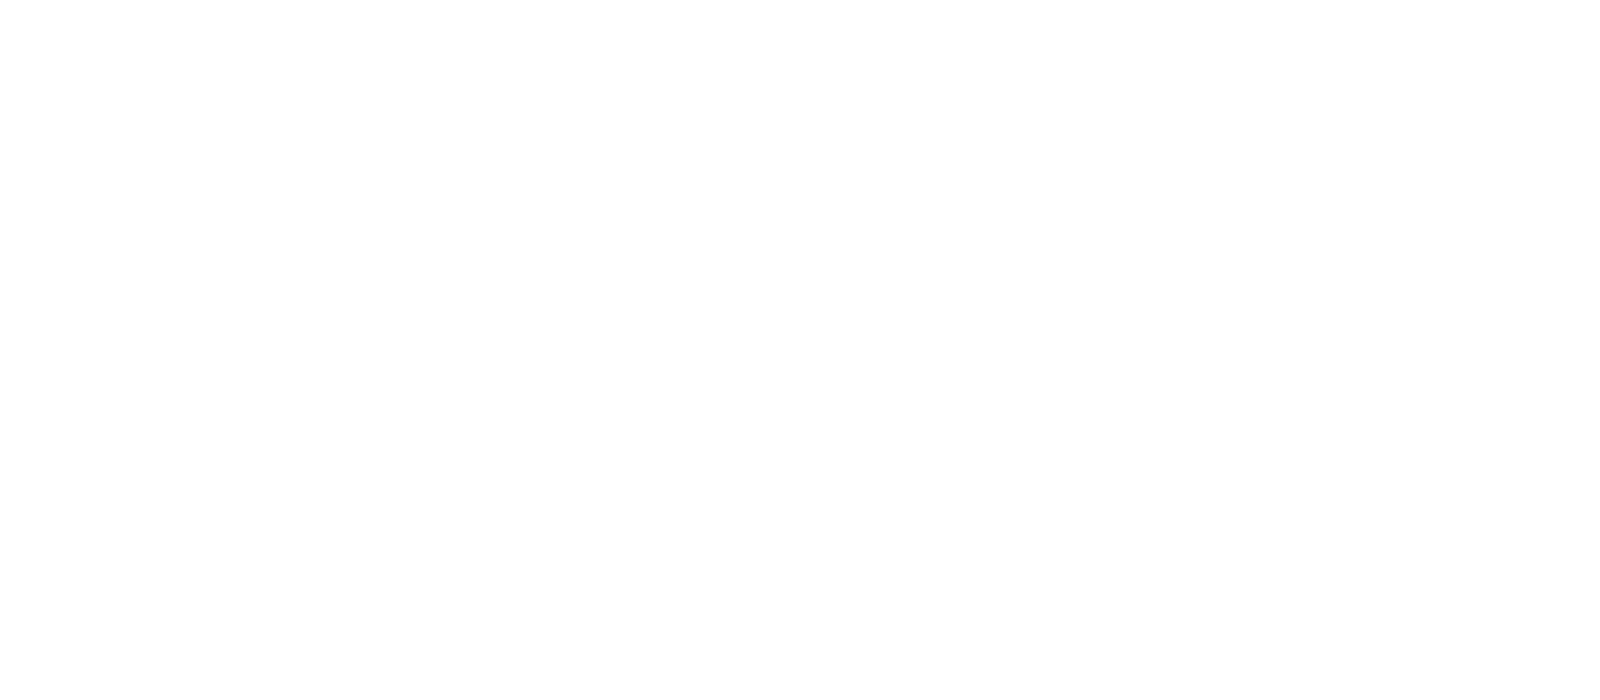 The Syar Foundation